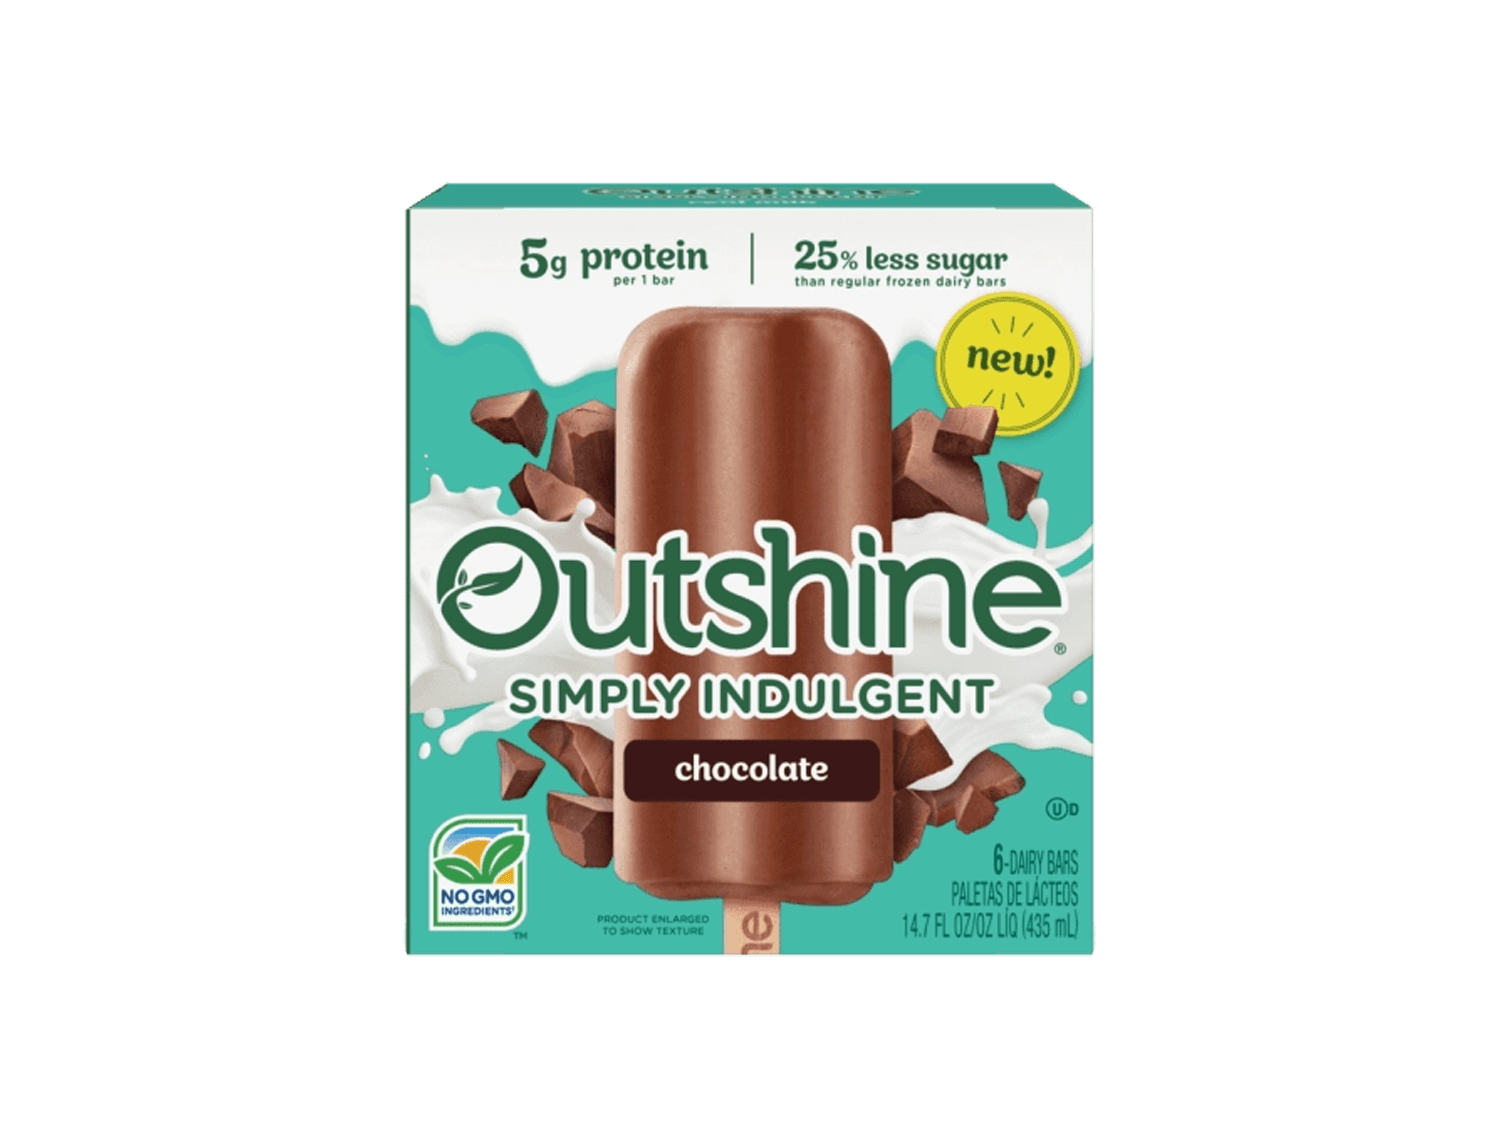 box of Outshine simply indulgent chocolate bars